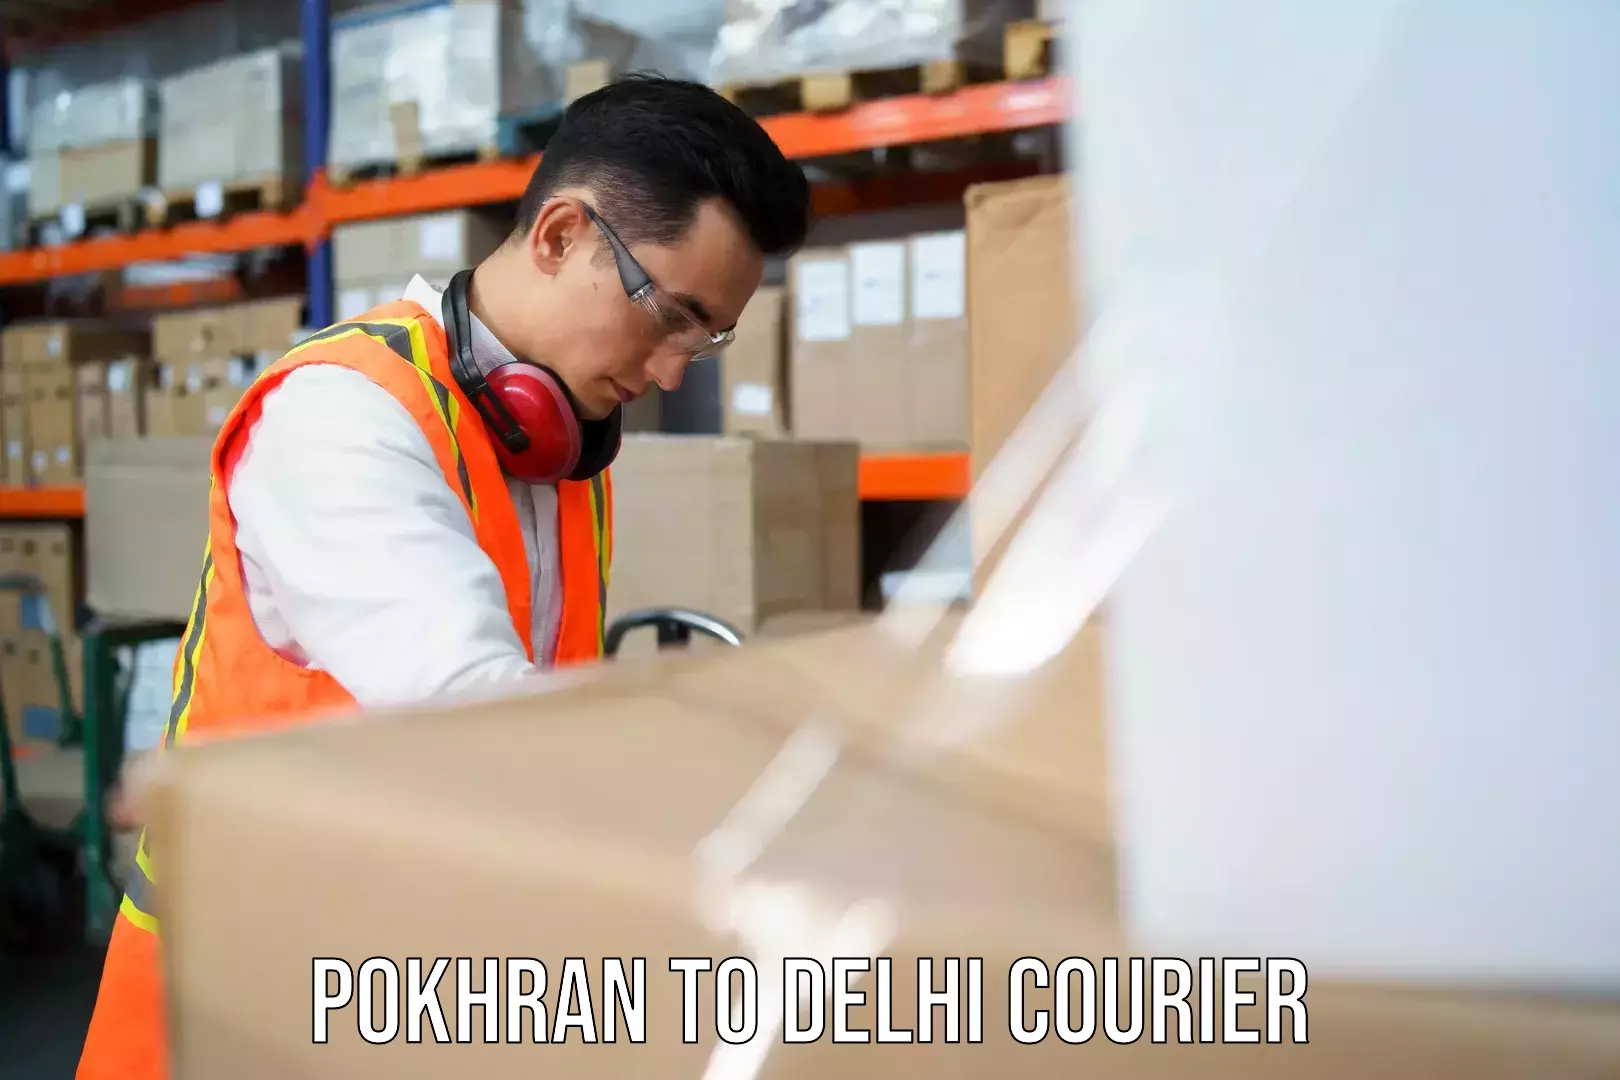 Courier insurance in Pokhran to University of Delhi